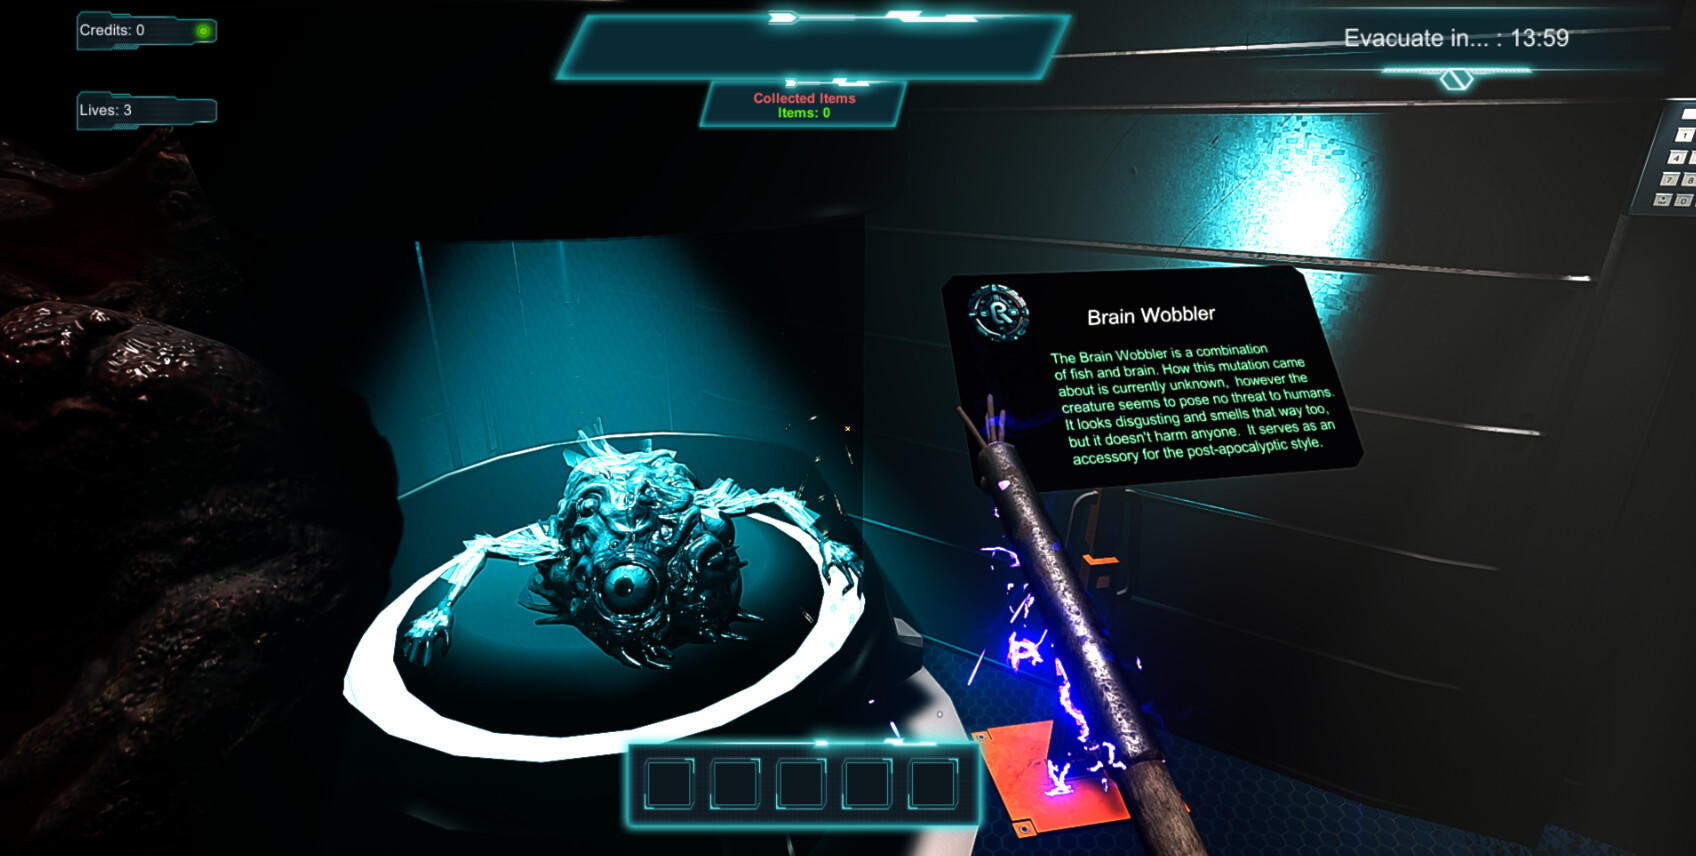 Celestial Rune Consortium: Shadows of Ascension screenshot game